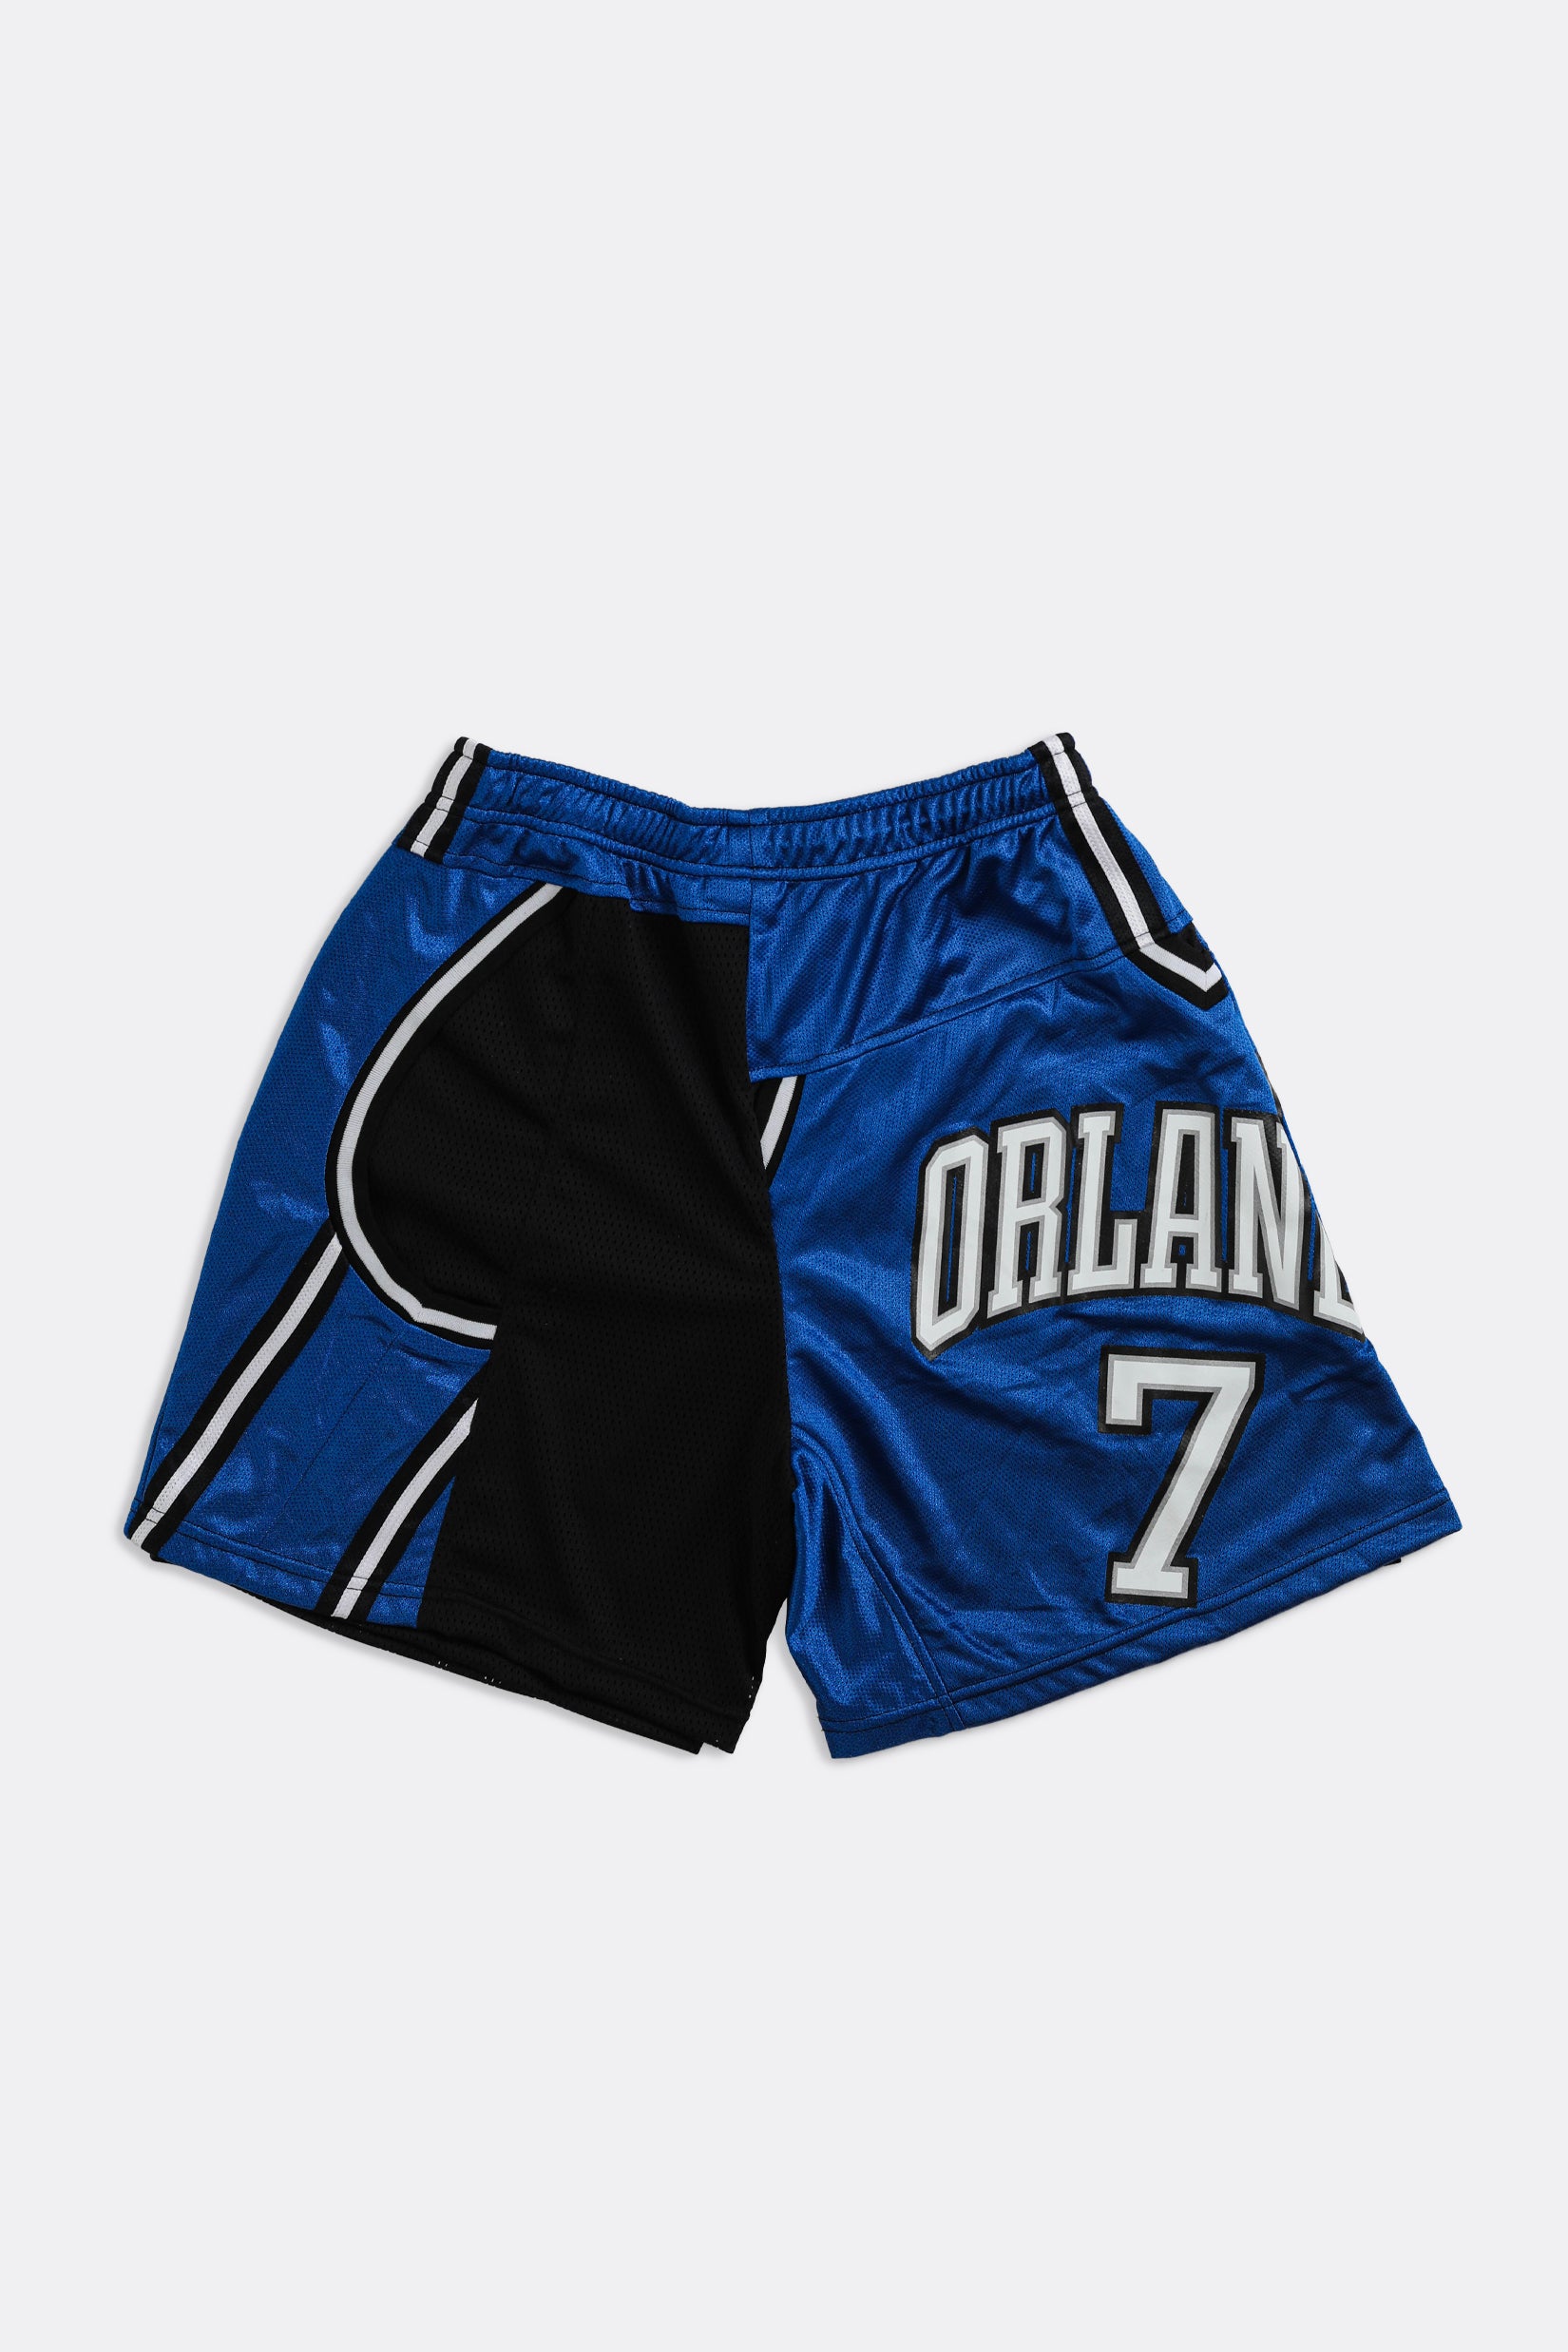 Orlando Magic Shorts, Magic Basketball Shorts, Running Shorts